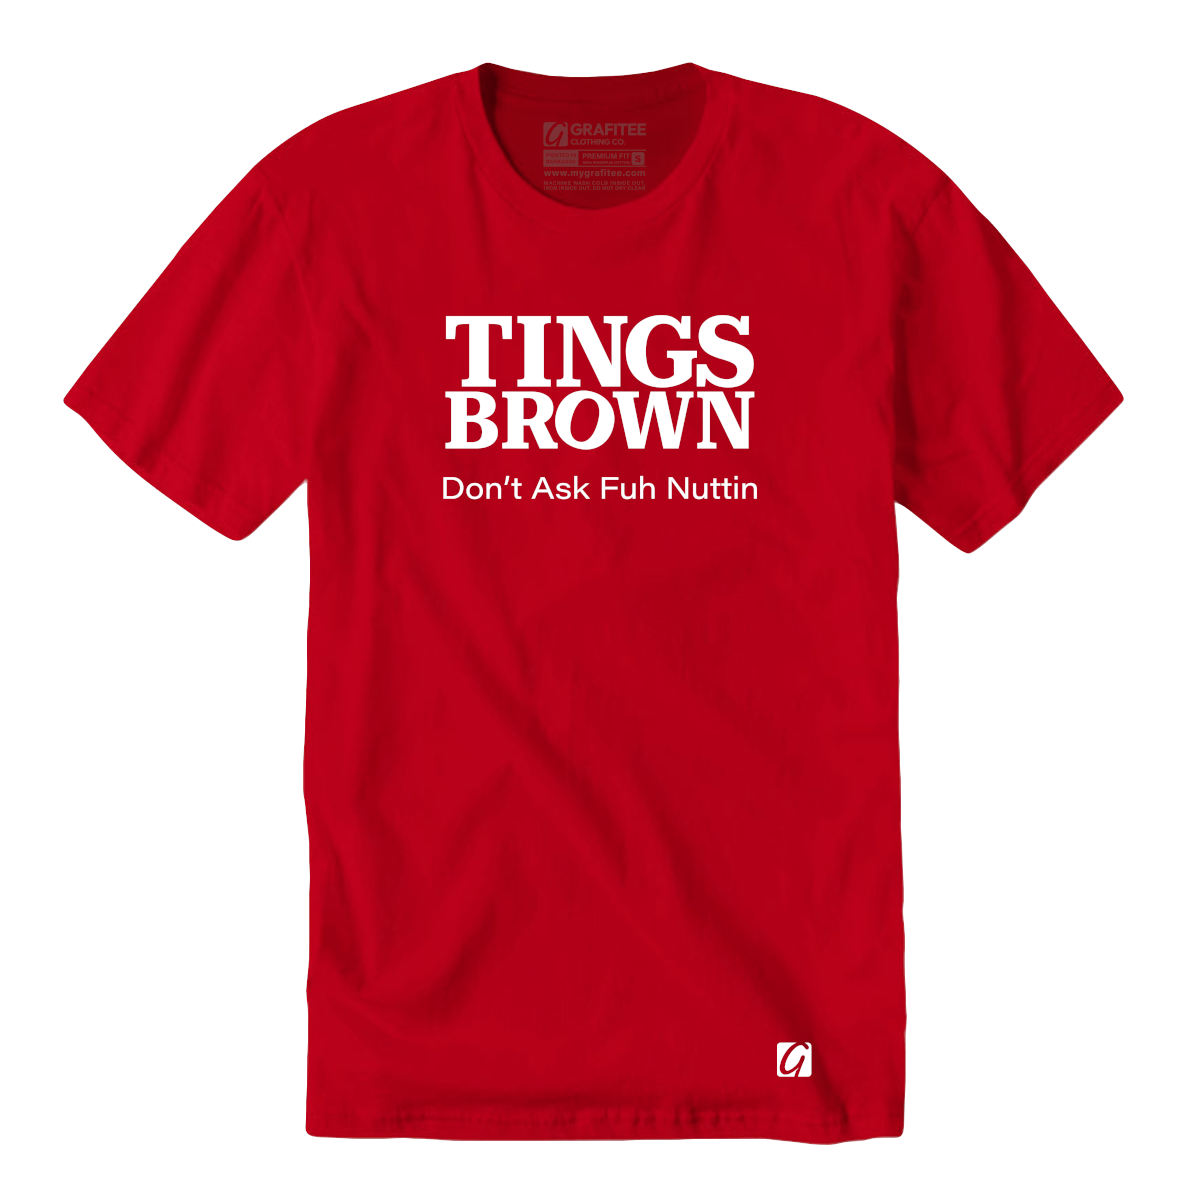 Tings Brown